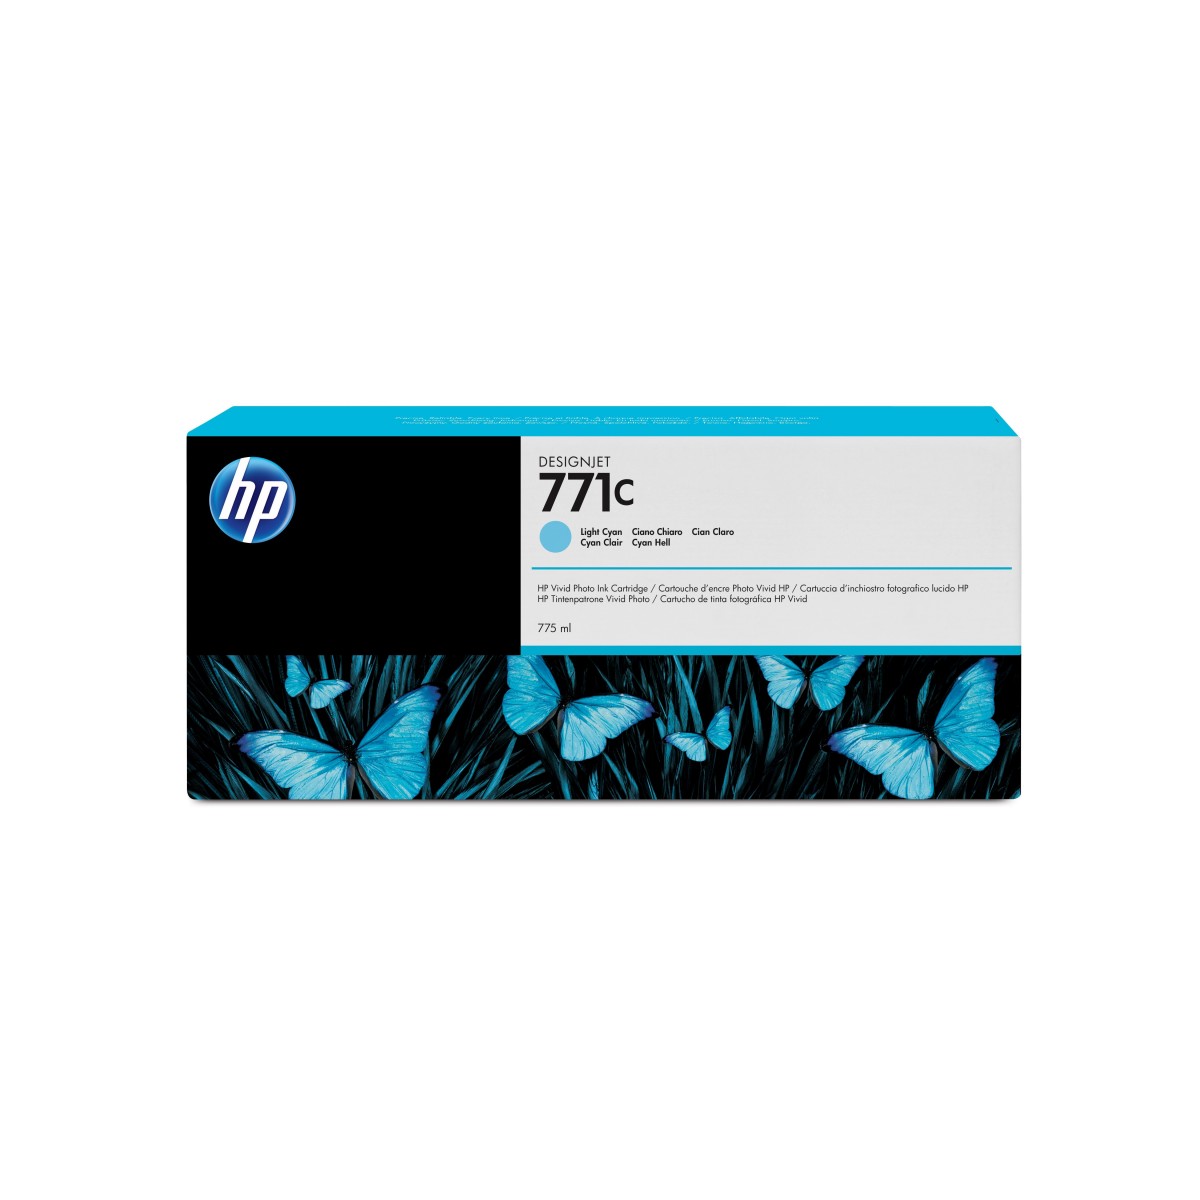 HP DesignJet 771C - Ink Cartridge Original - Light / Photo cyan - 775 ml